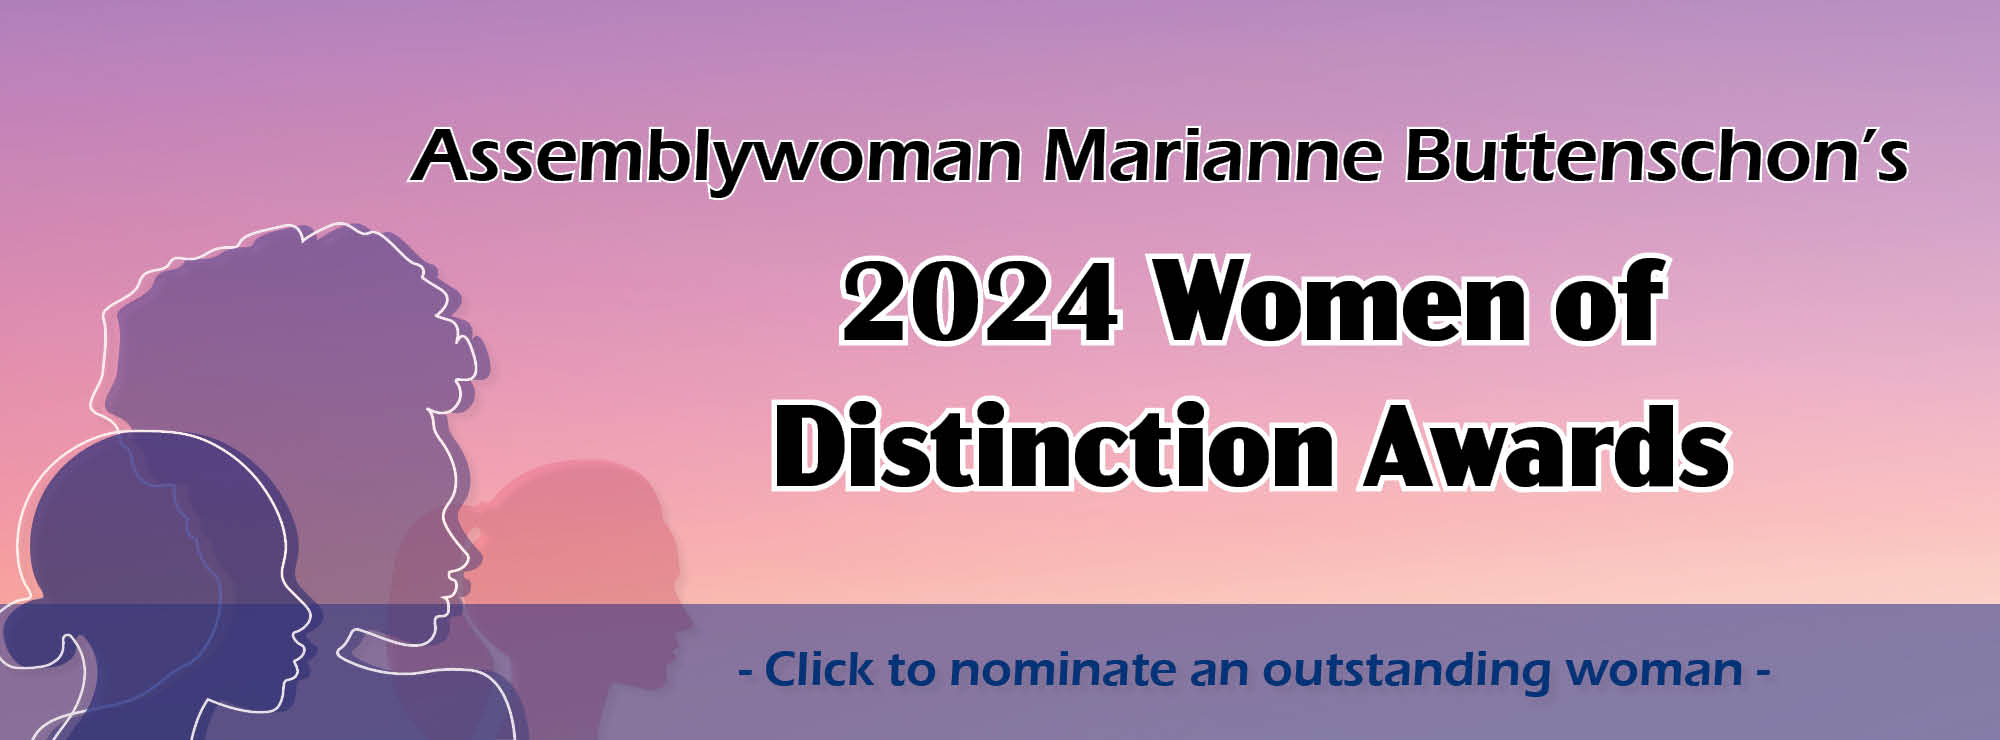 2024 Women of Distinction